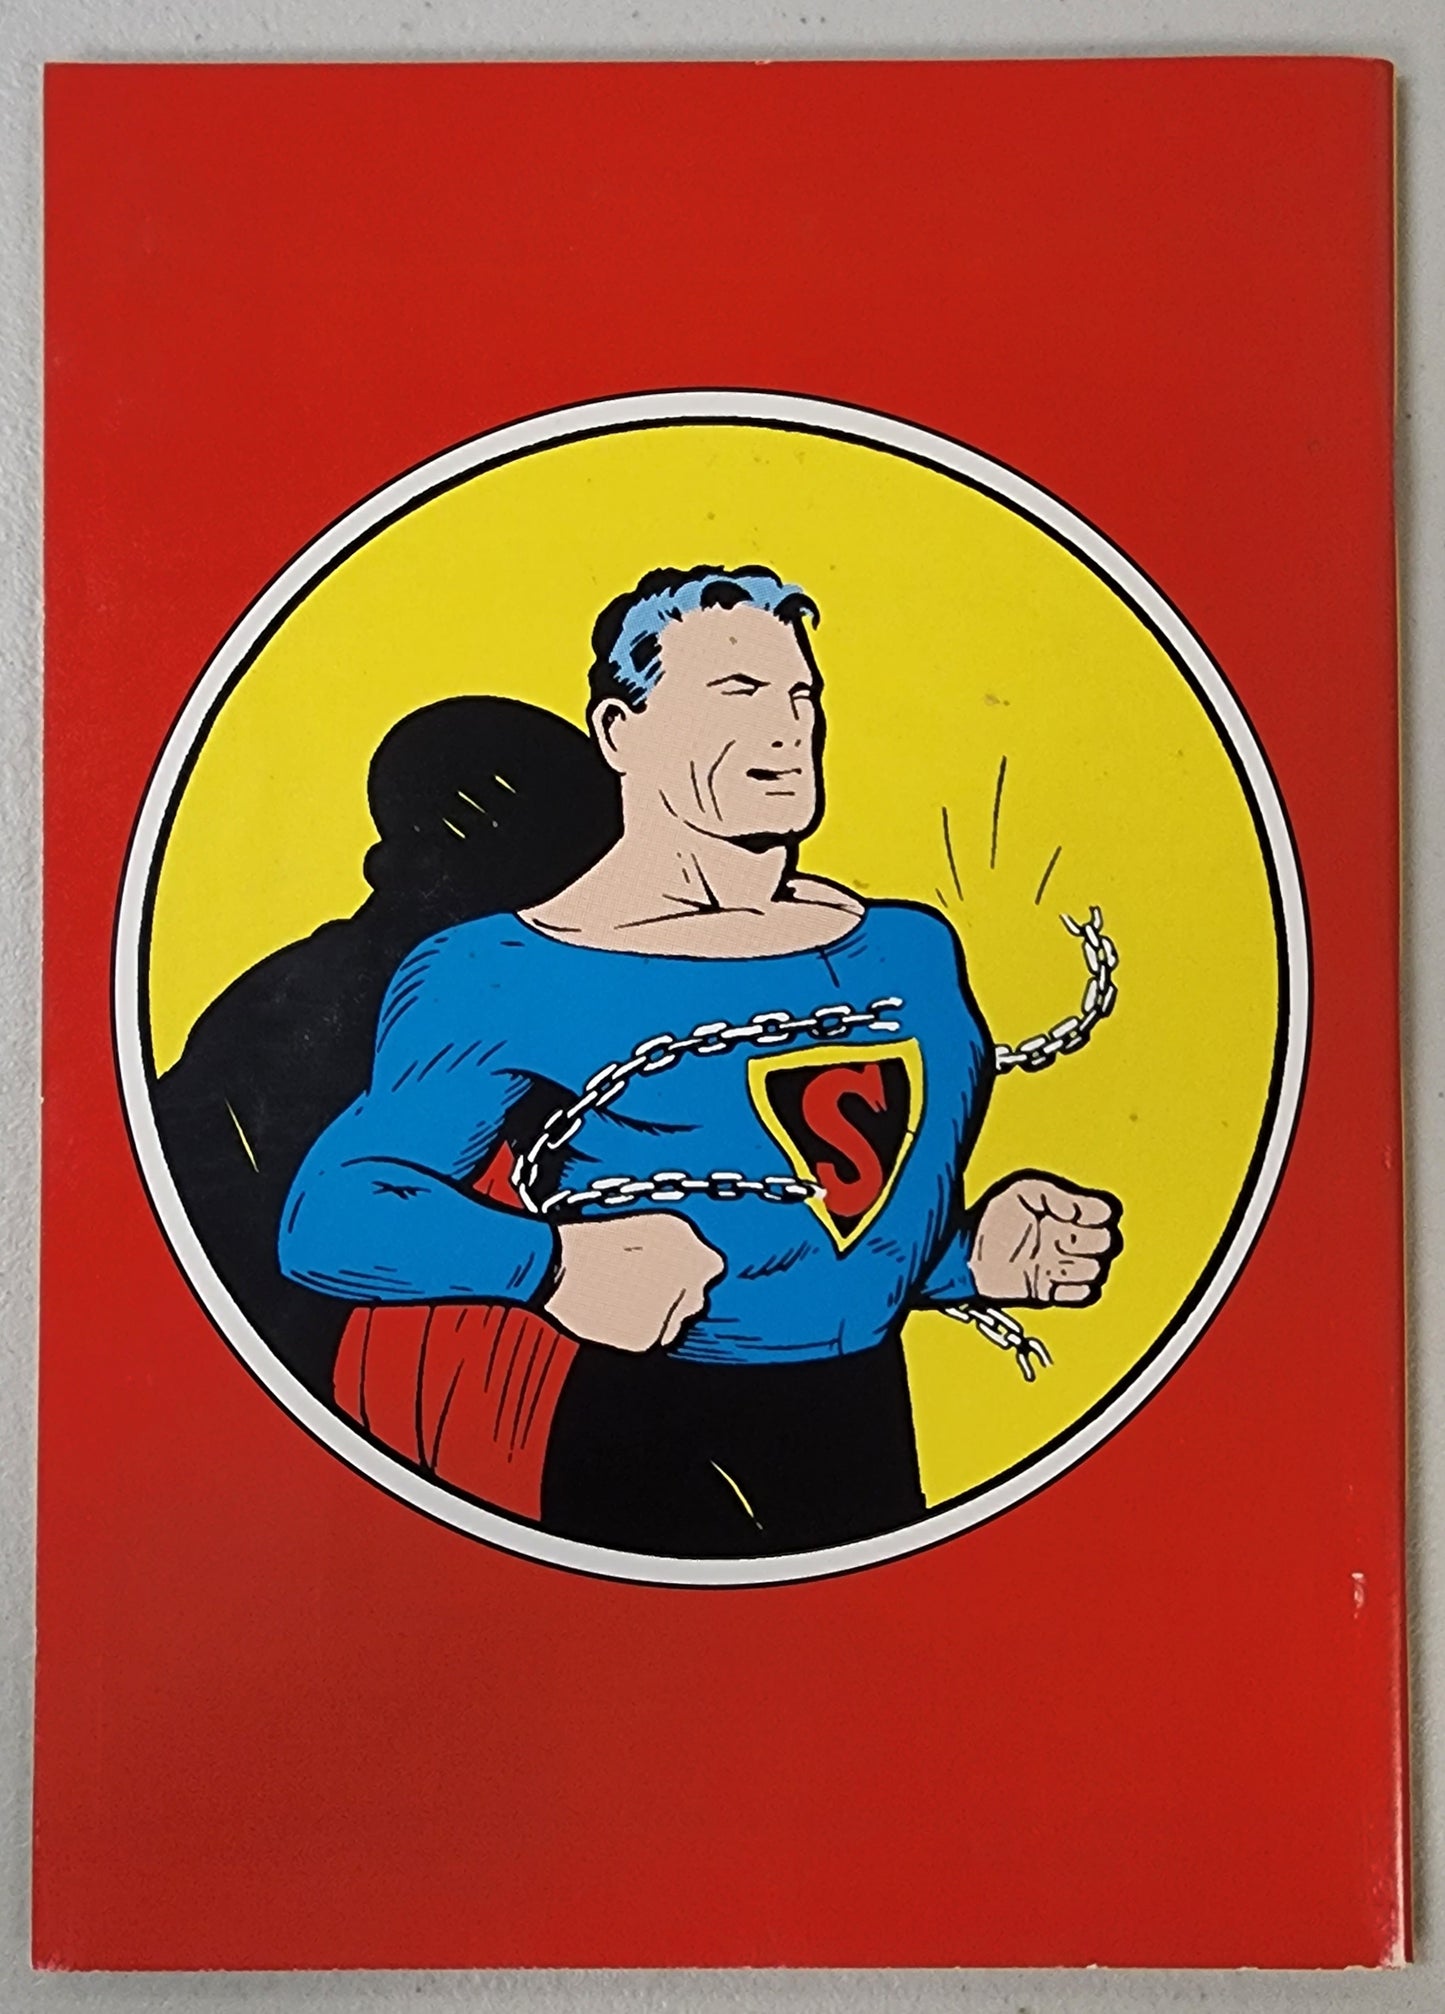 SUPERMAN MASTERPIECE EDITION #1 1999 (REPRINTS SUPERMAN #1)